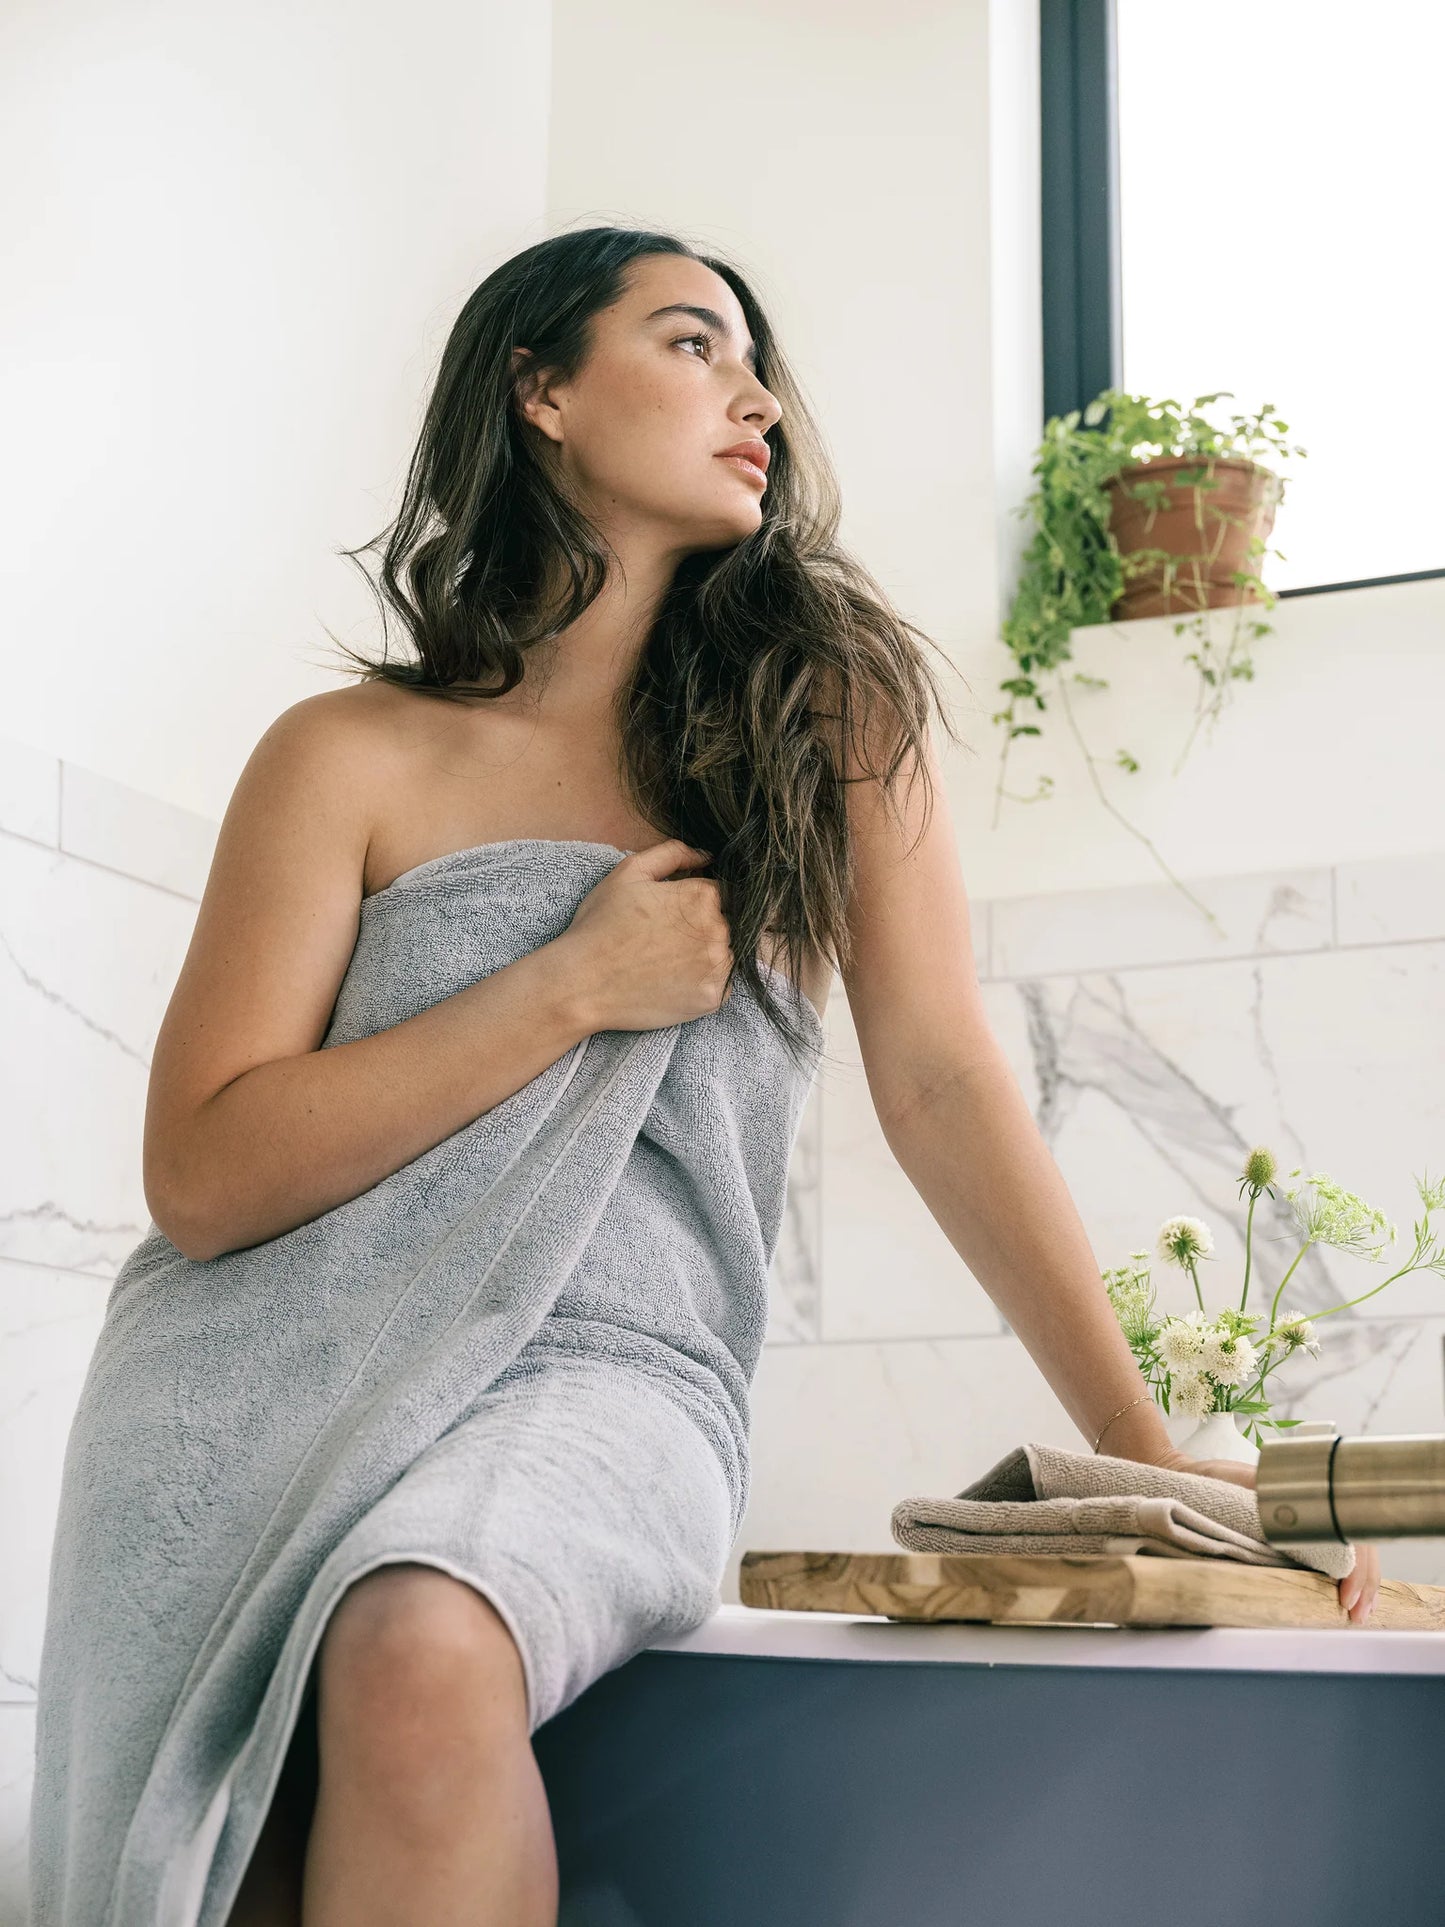 Premium Plush Bath Towel Set